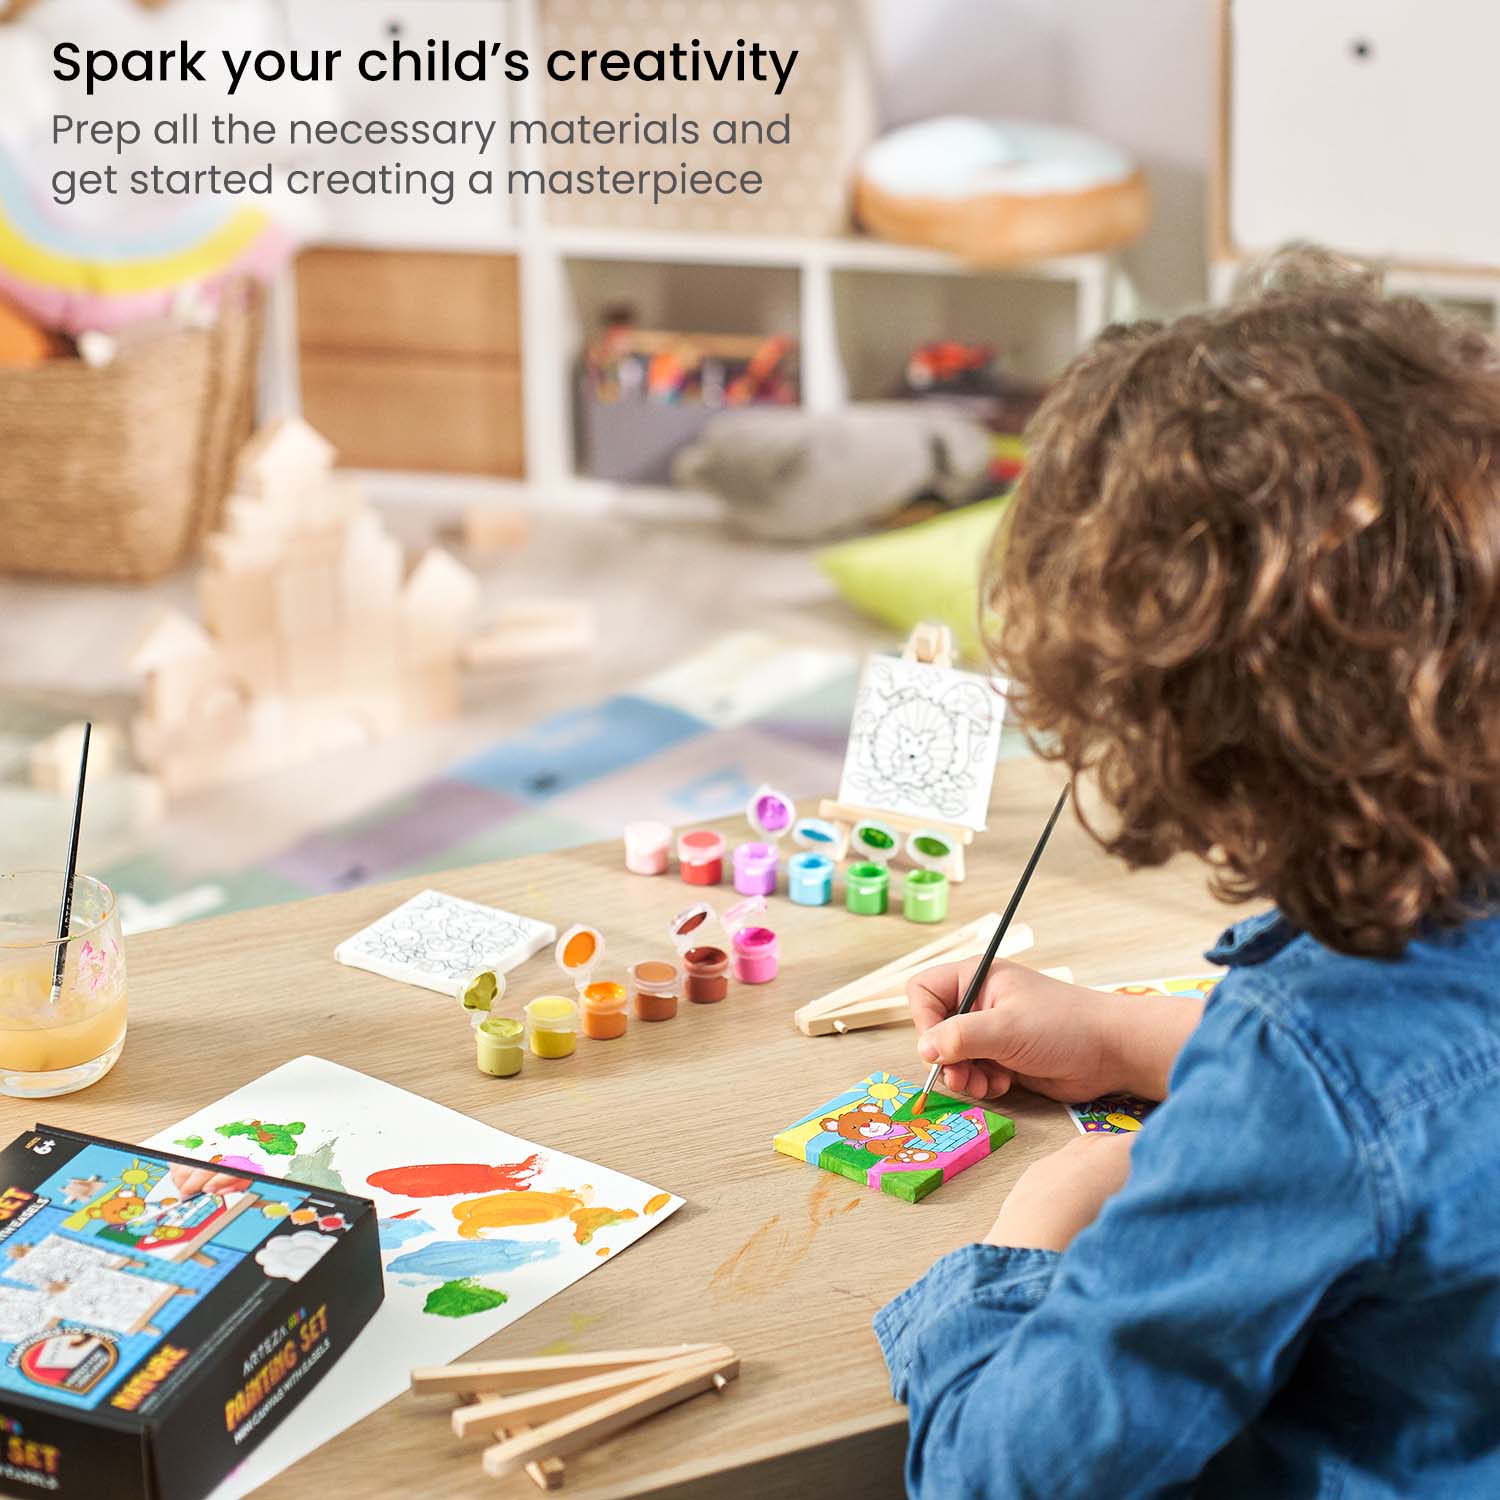 Arteza® Kids Canvas Paint Kit, 4 8x8 Canvas with Brushes & Paints Water  Creatures